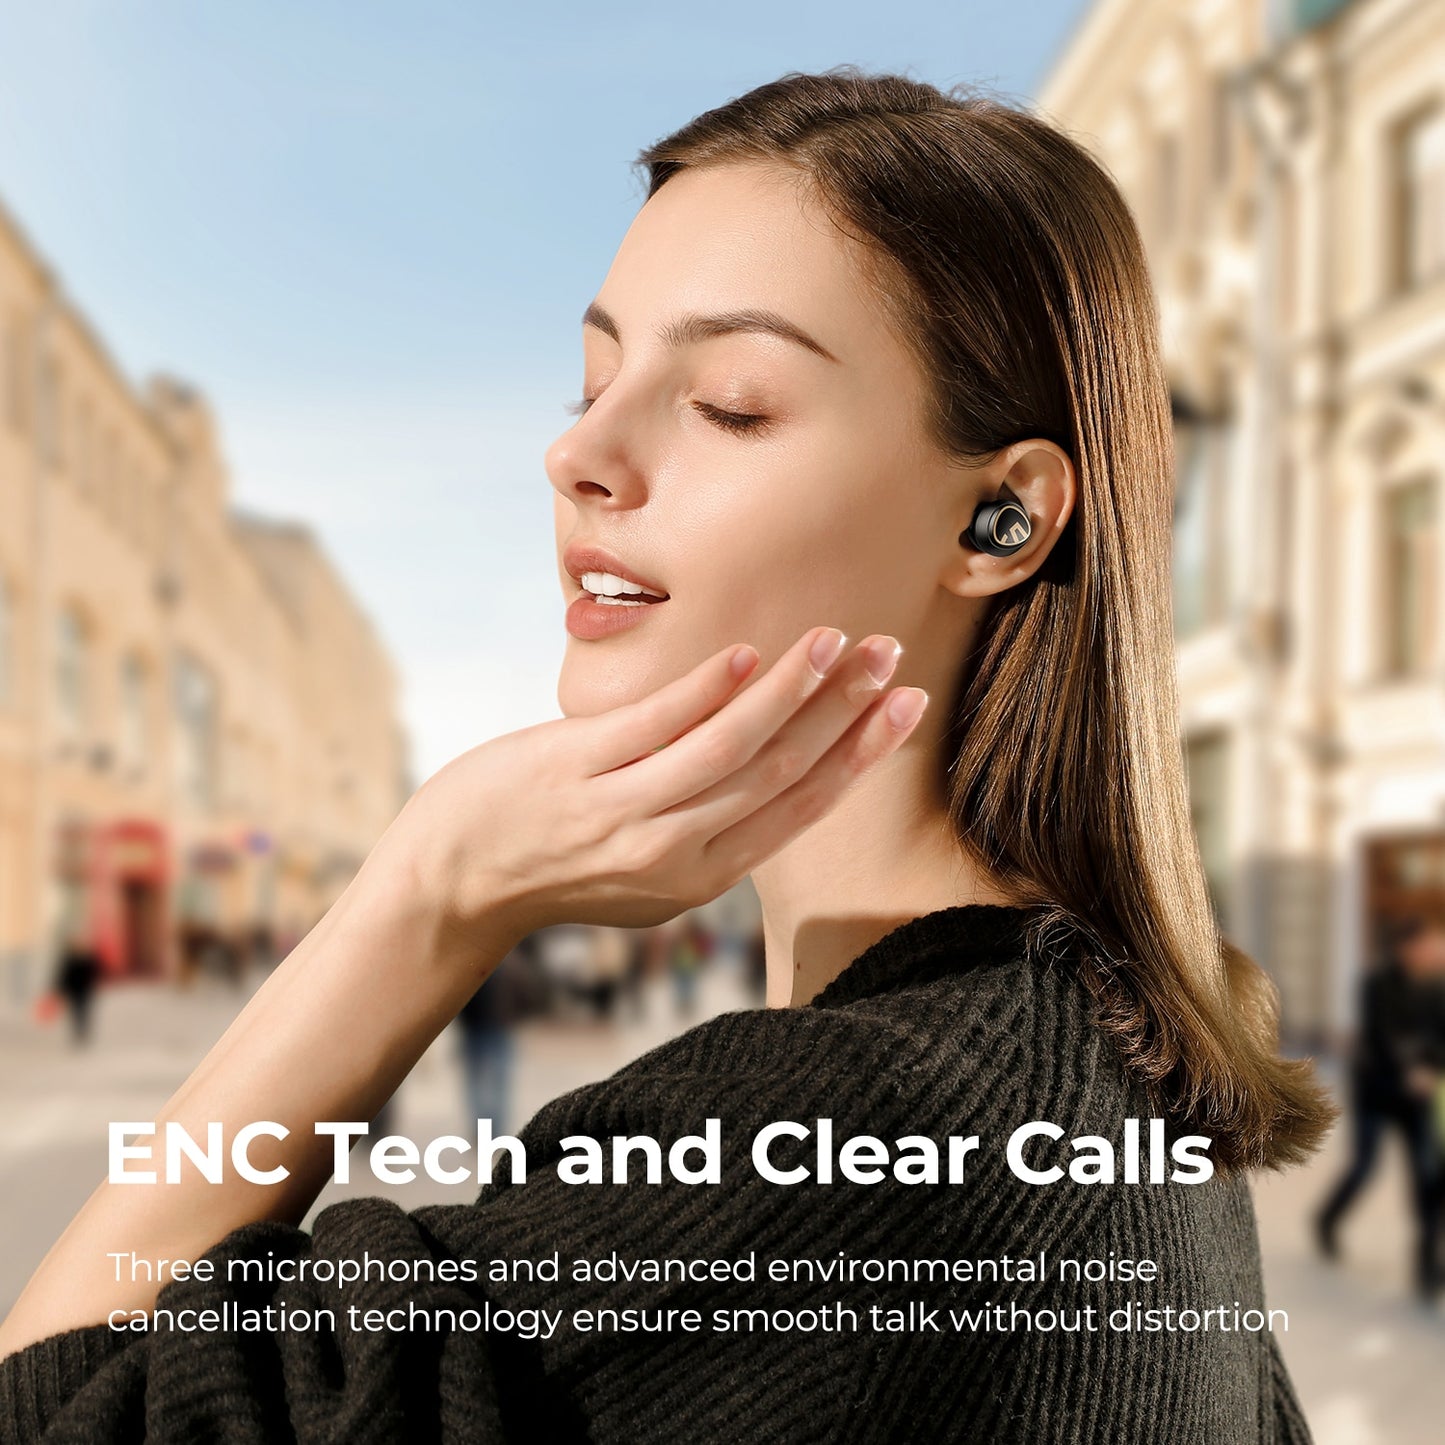 SOUNDPEATS Mini Pro HS Wireless ANC Earbuds